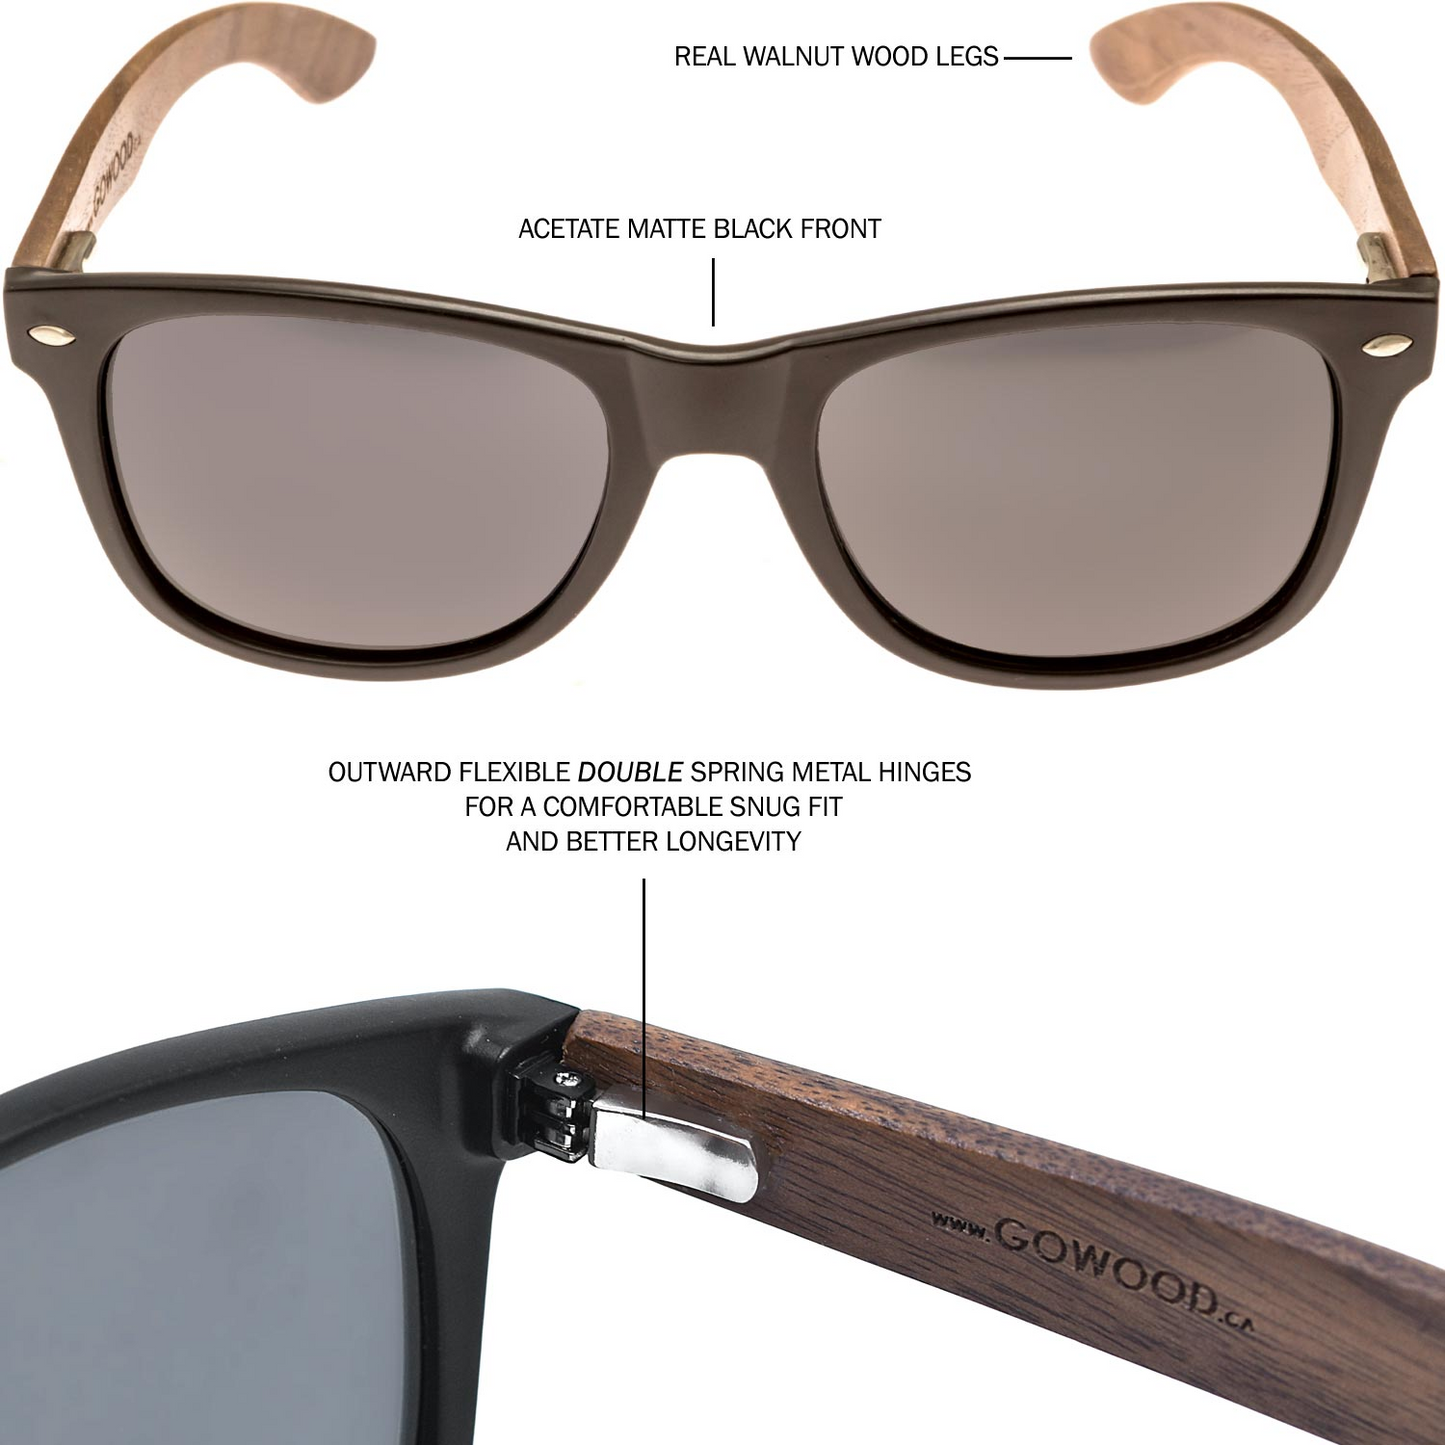 Walnut wood classic style sunglasses with black polarized lenses